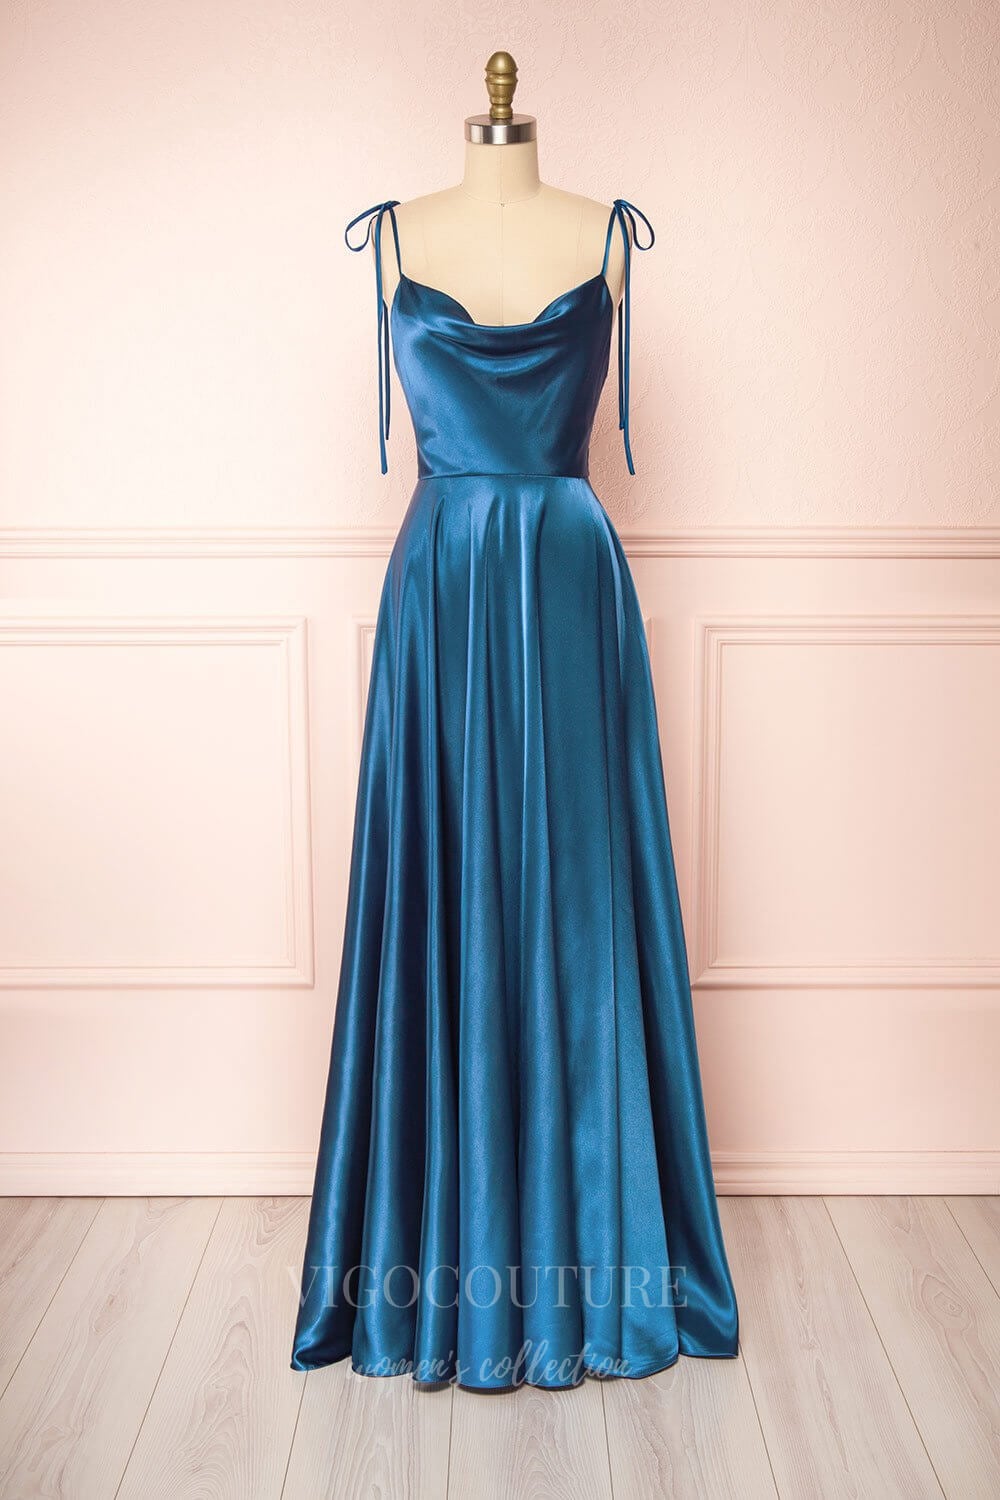 vigocouture-Dusty Pink Spaghetti Strap Prom Dress 20578-Prom Dresses-vigocouture-Blue-US2-